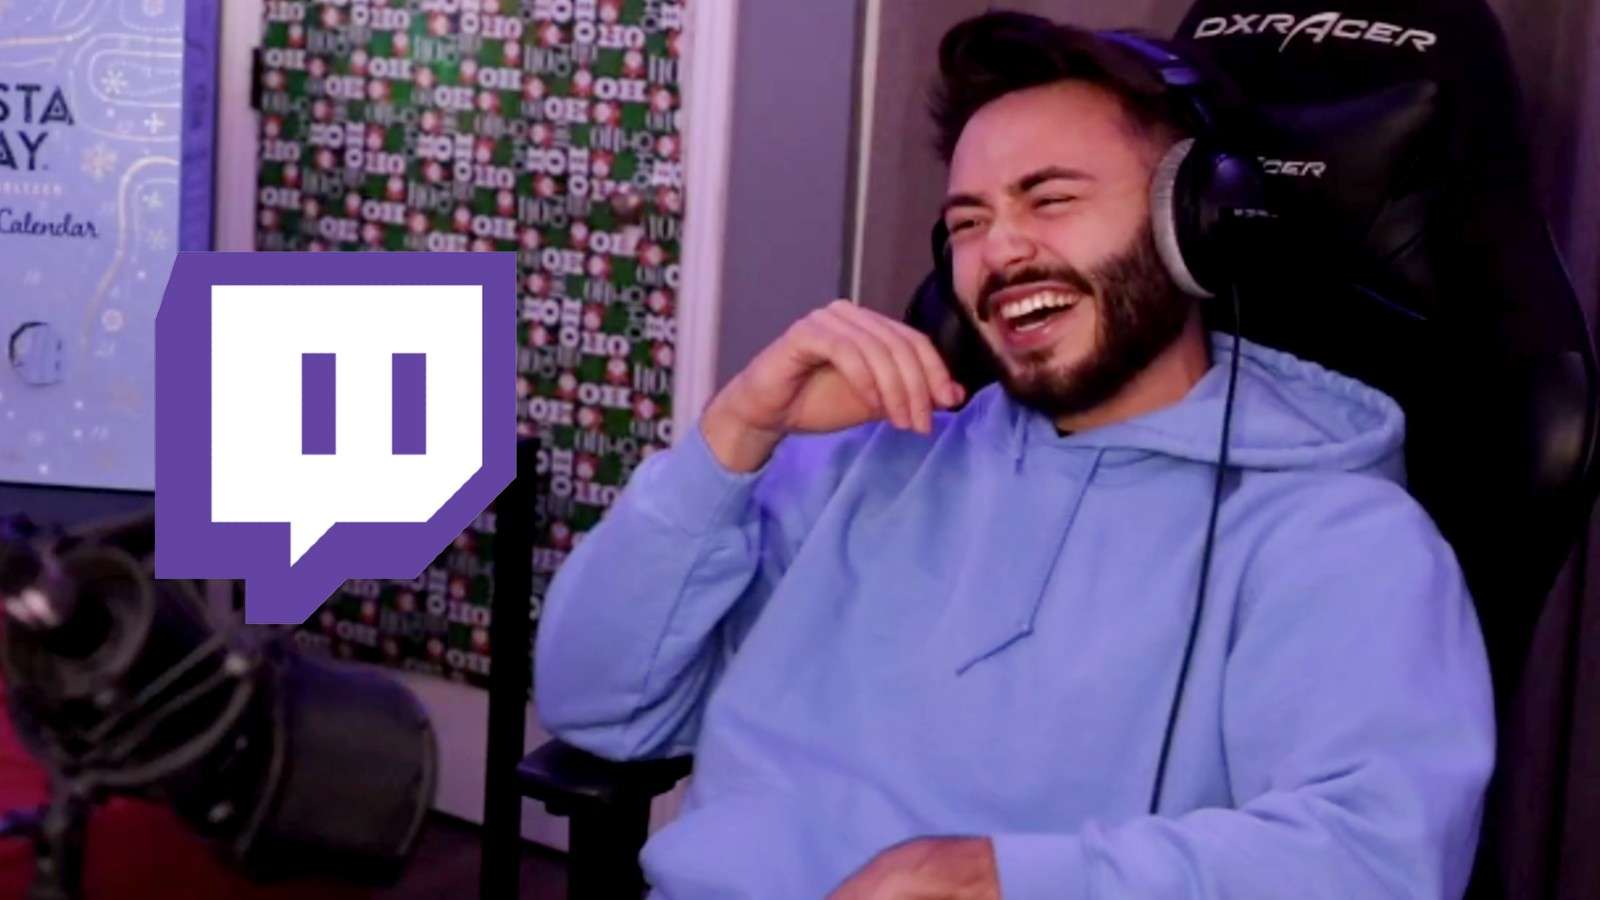 Streamer CruzRivas laughs next to the Twitch logo